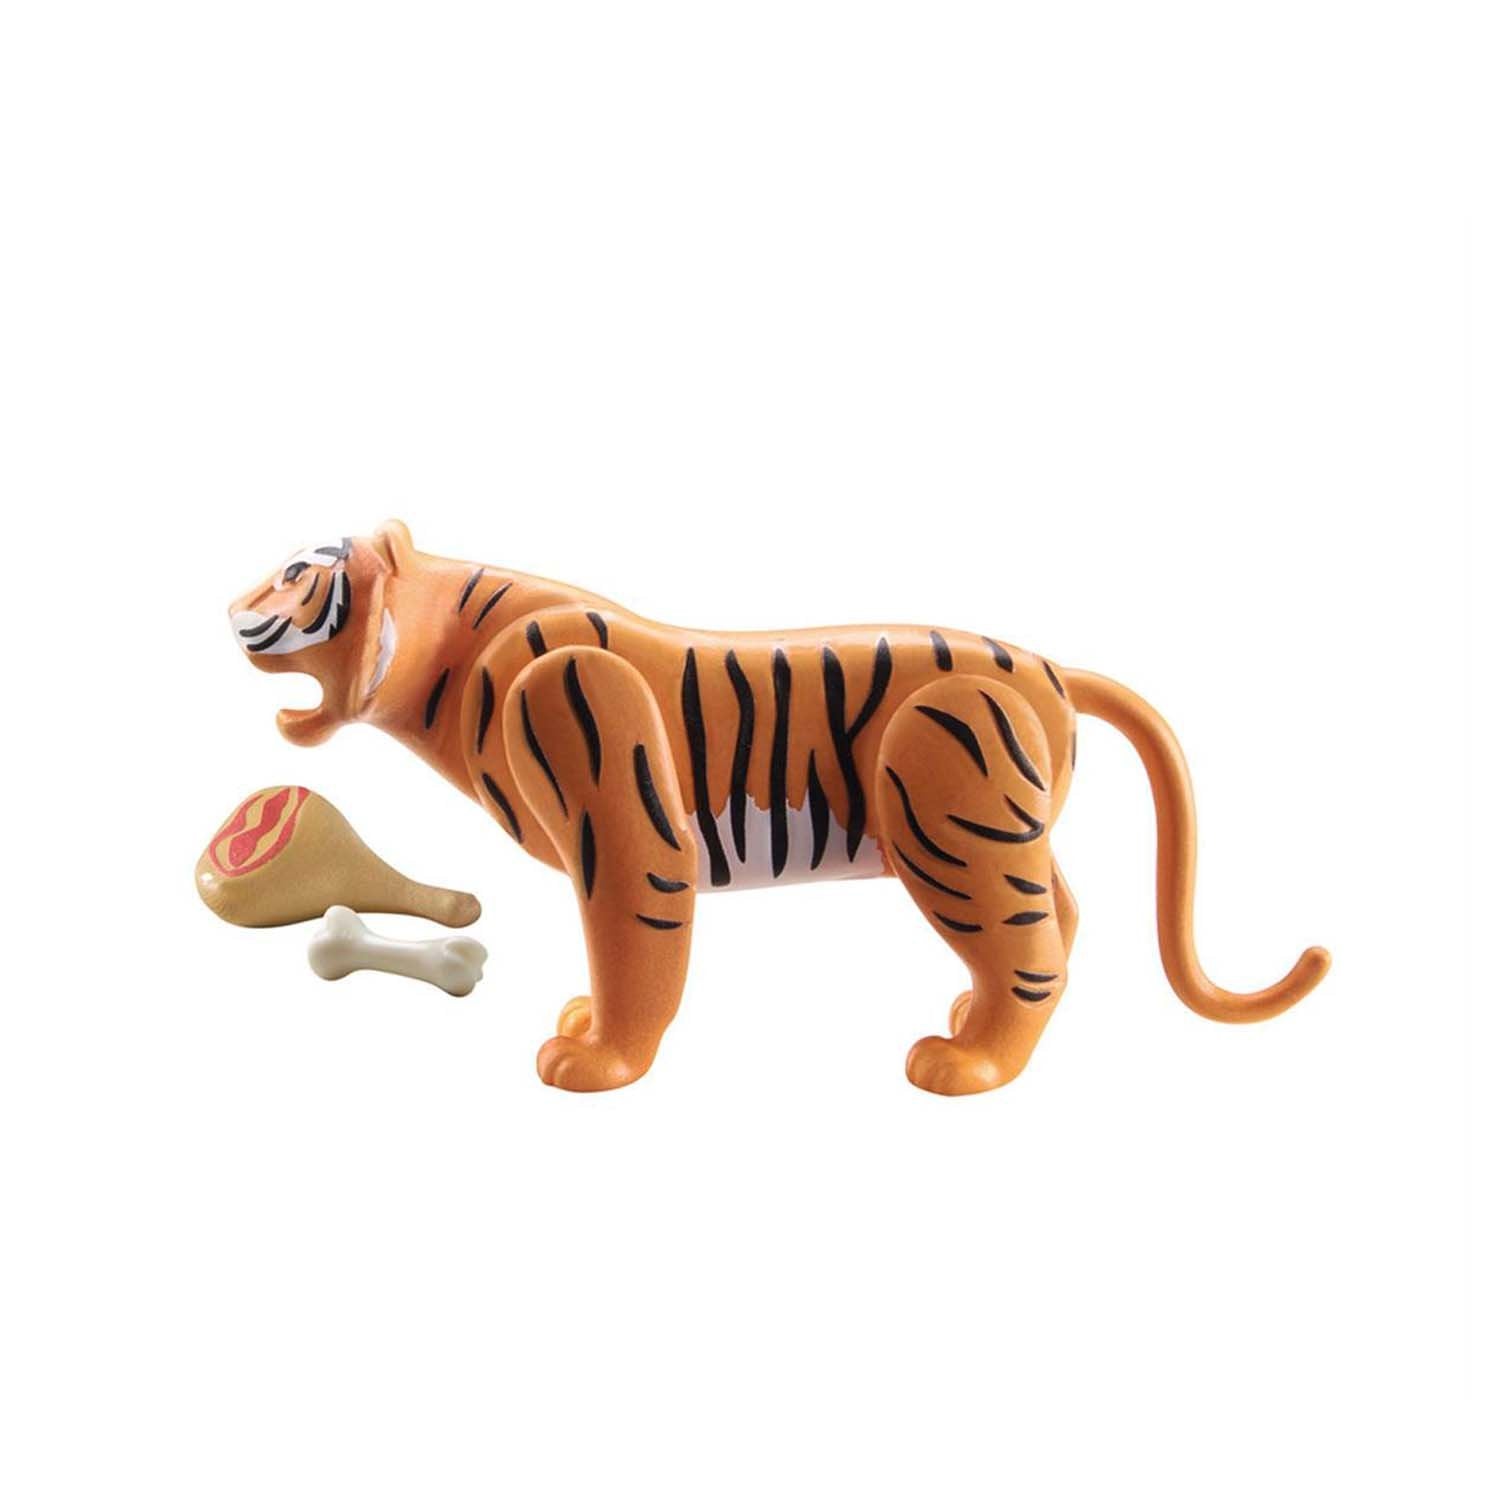 Playmobil Wiltopia Tiger Figure